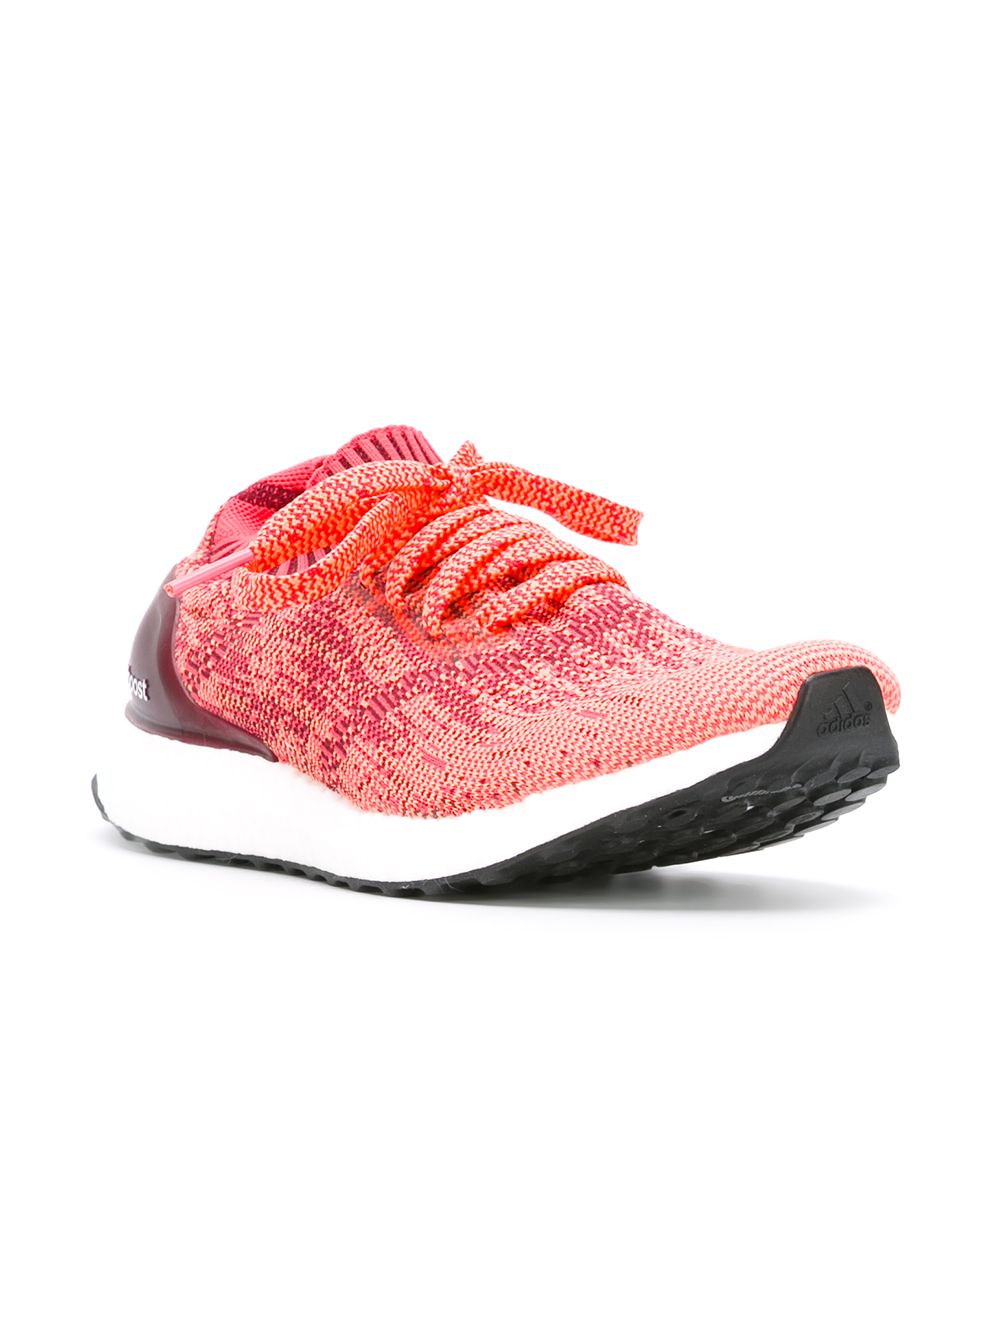 фото Adidas кроссовки 'ultraboost uncaged' для бега